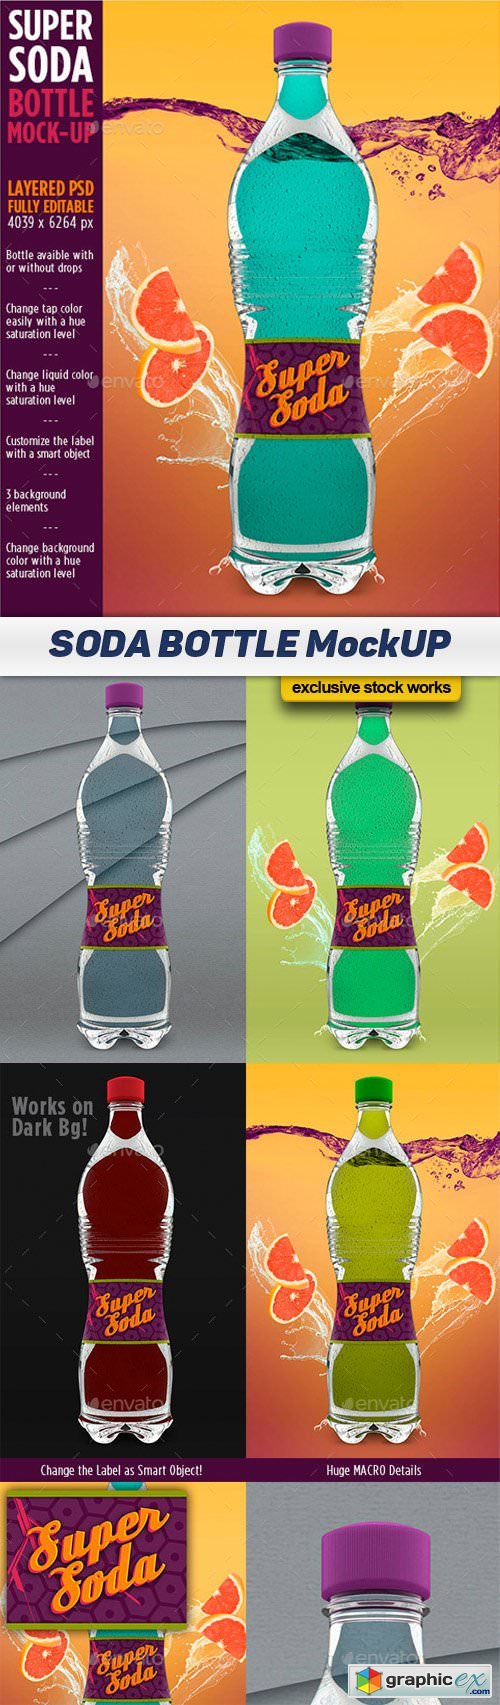 Super Soda Bottle - Product MockUP